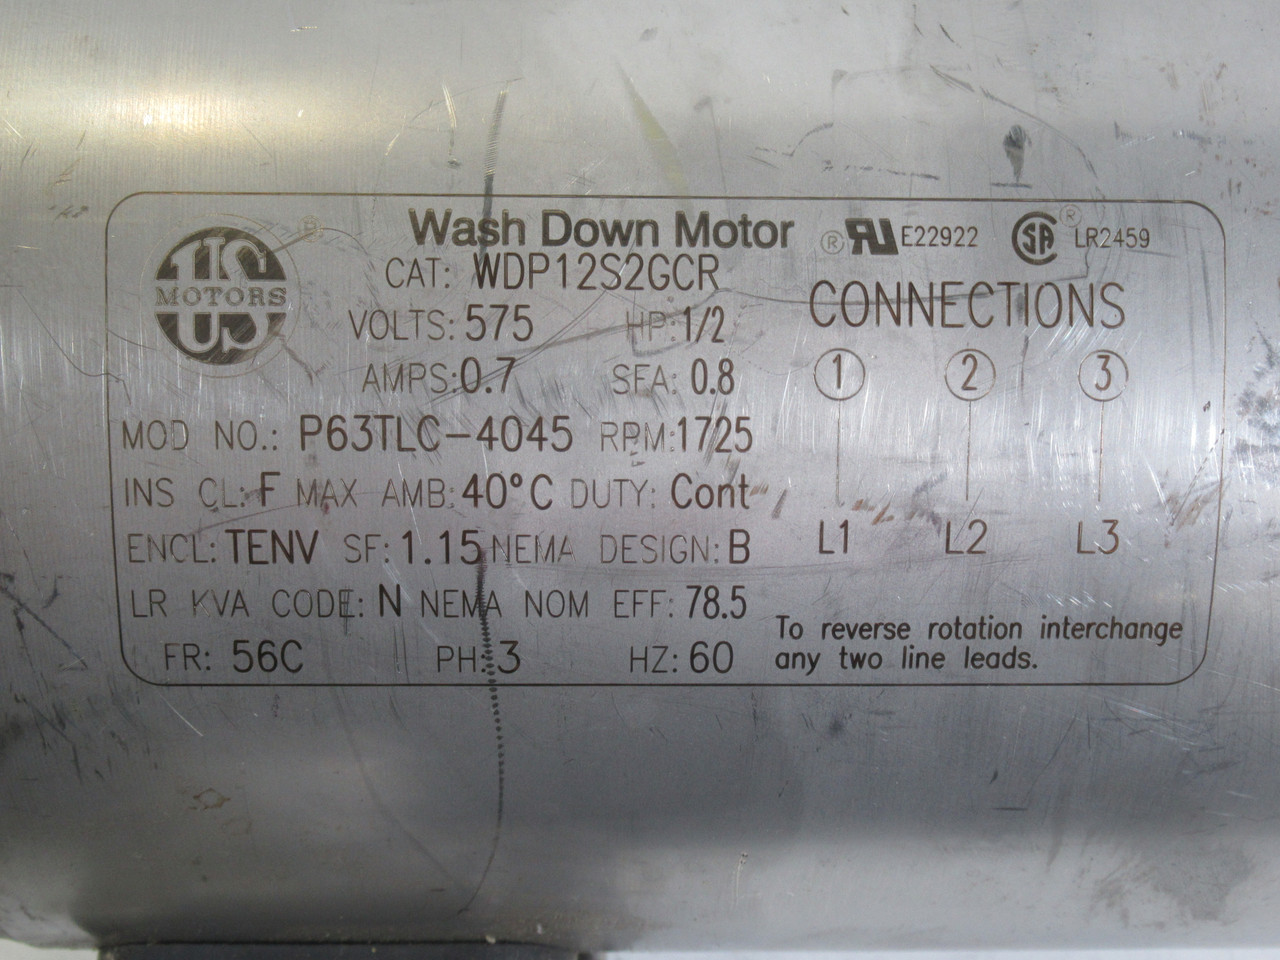 US Motors 1/2HP 1725RPM 575V 56C TENV 3ph 0.7A 60Hz USED